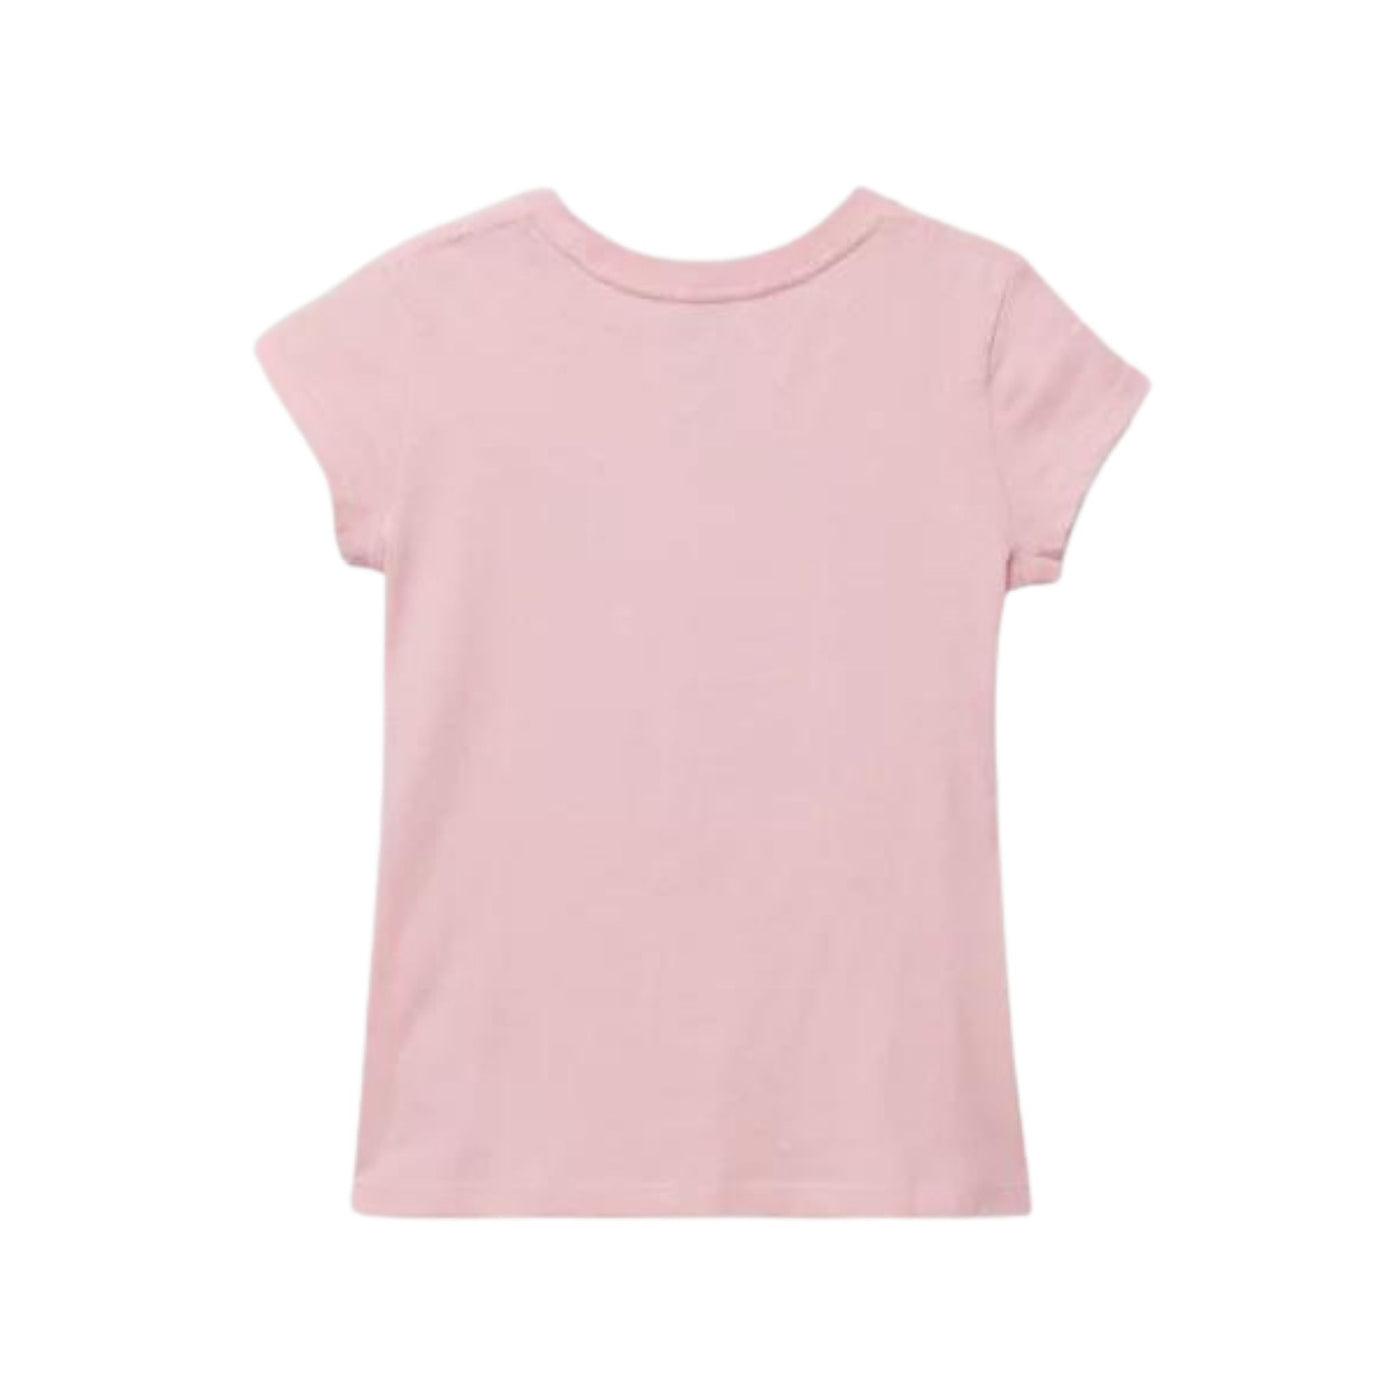 T-shirt bambina rosa firmata Polo Ralph Lauren vista retro